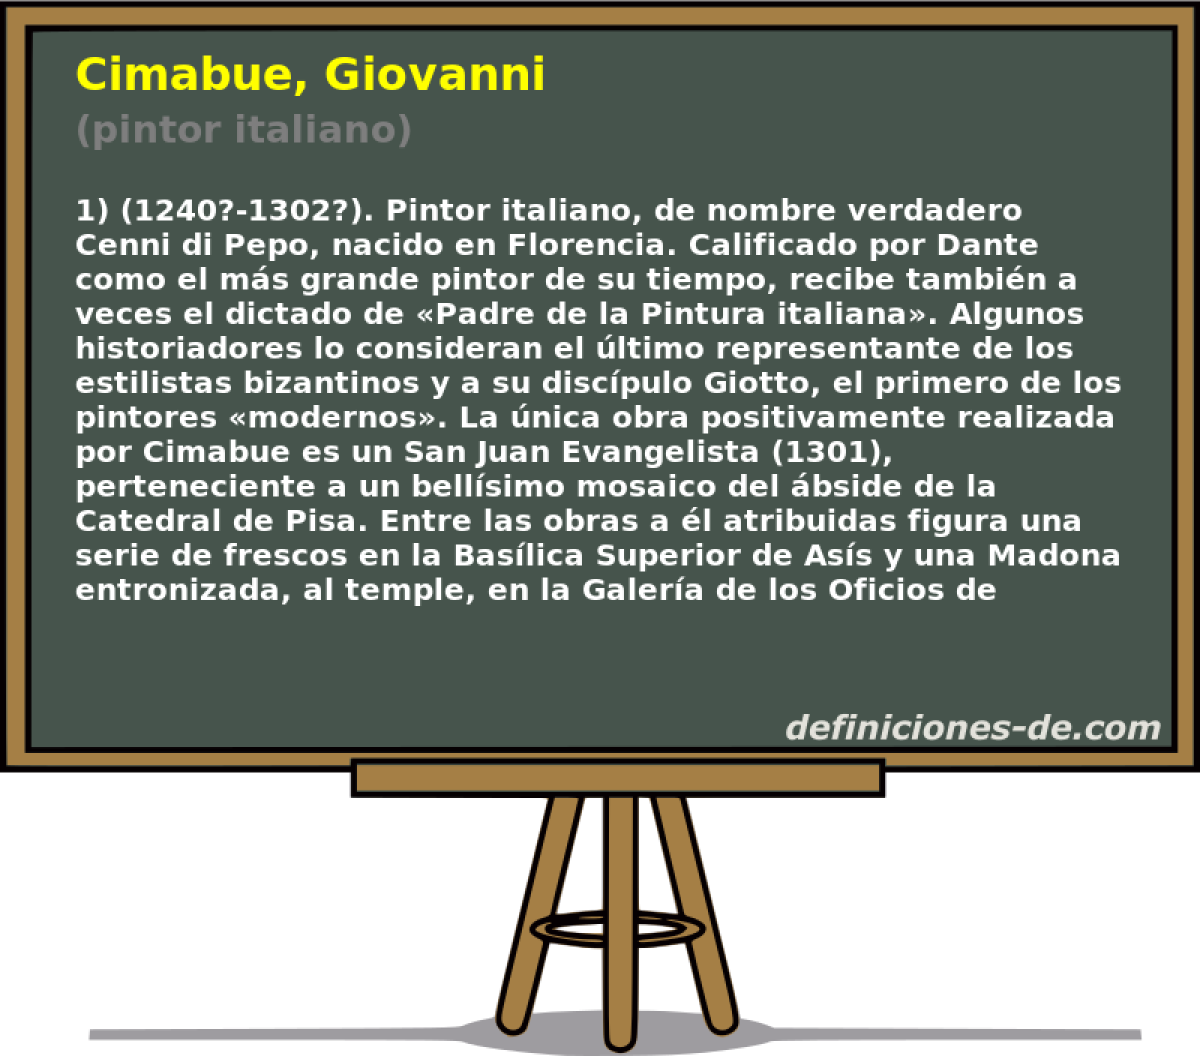 Cimabue, Giovanni (pintor italiano)